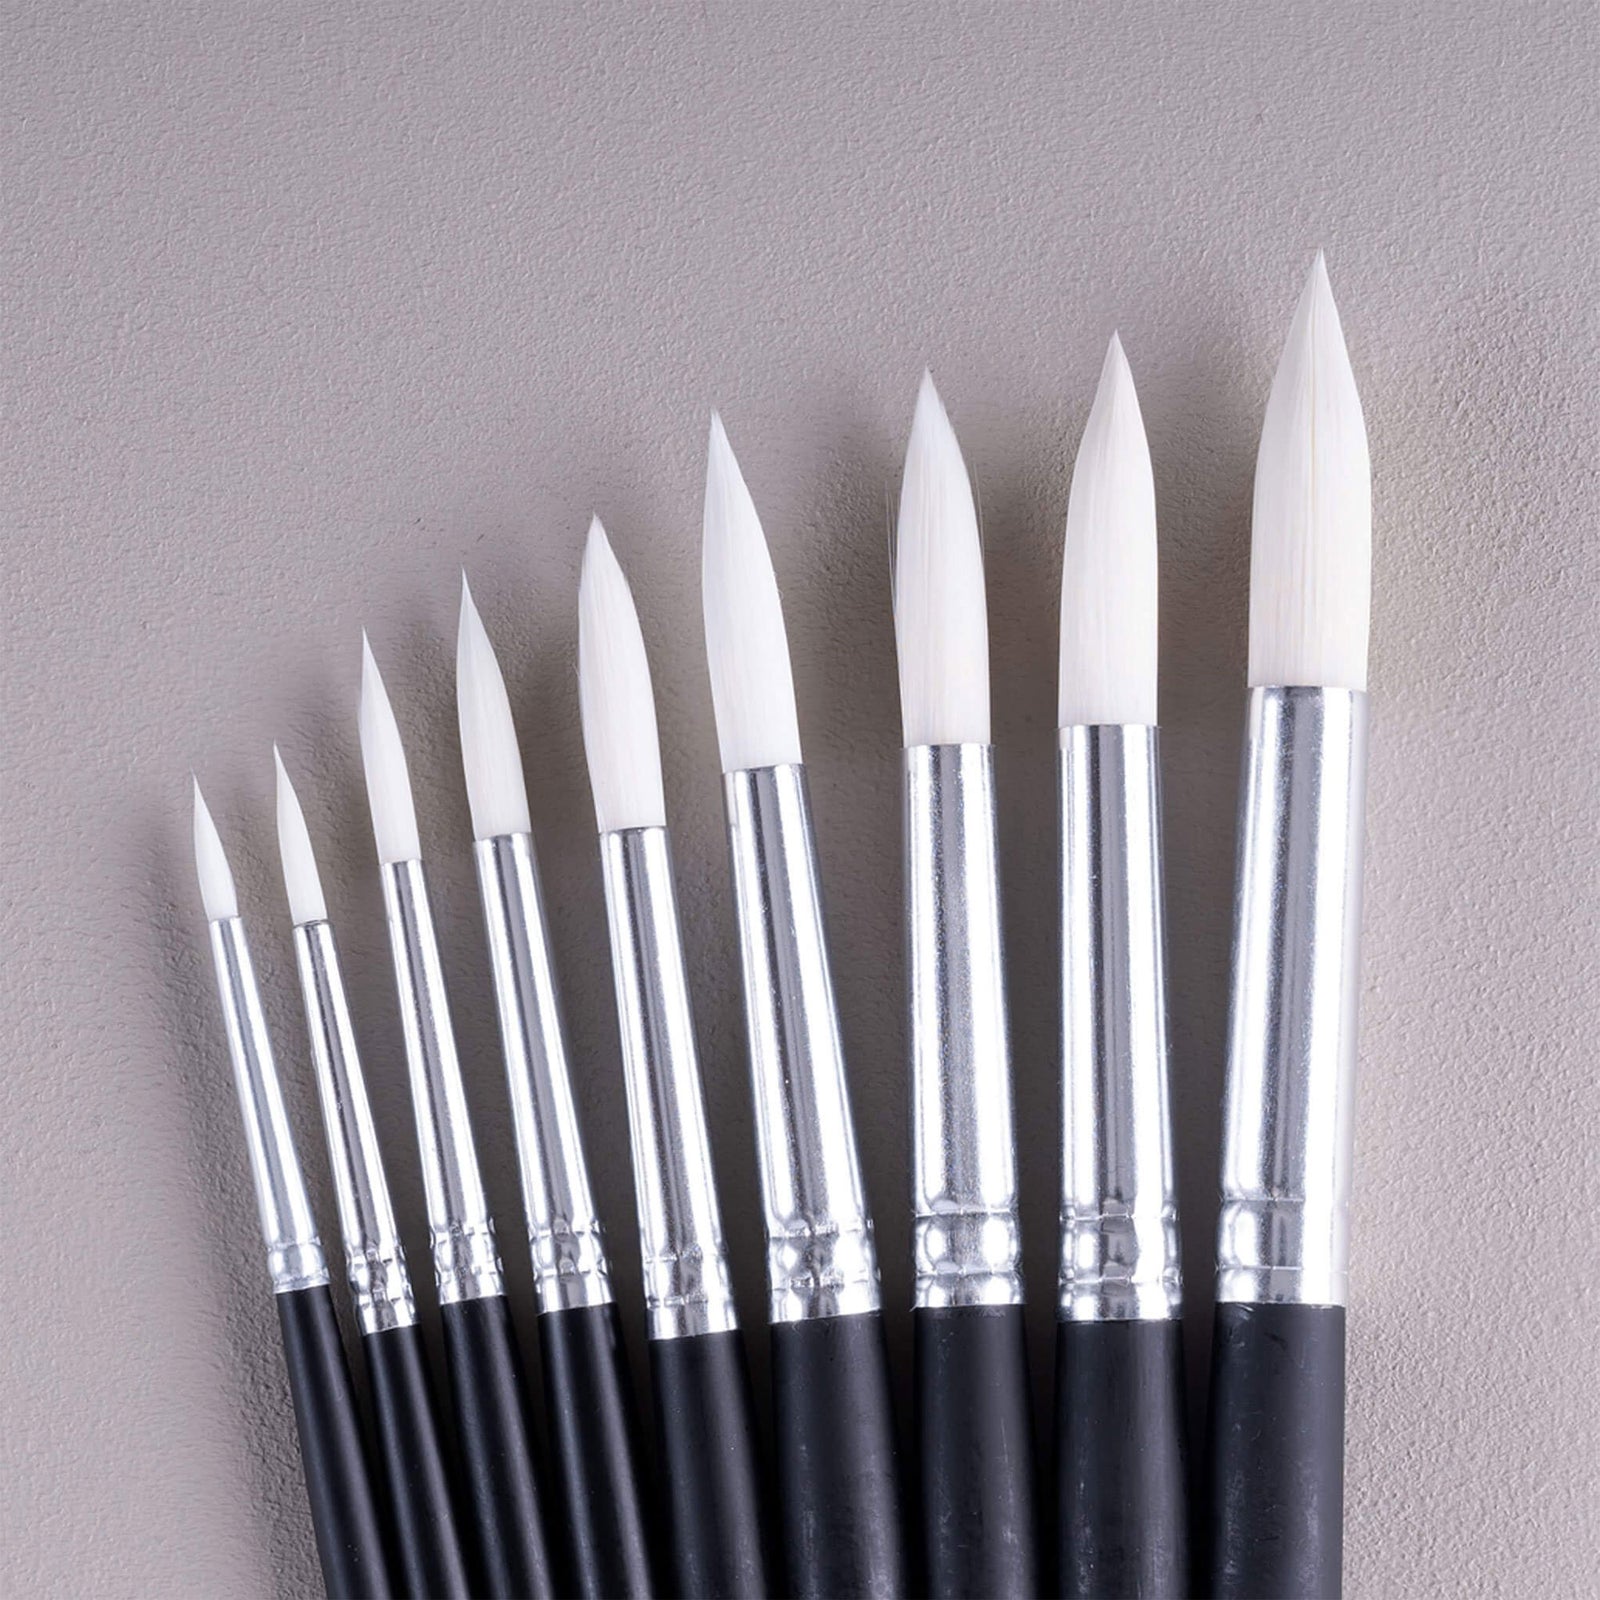 Buy Acrylic Paint Brushes Online